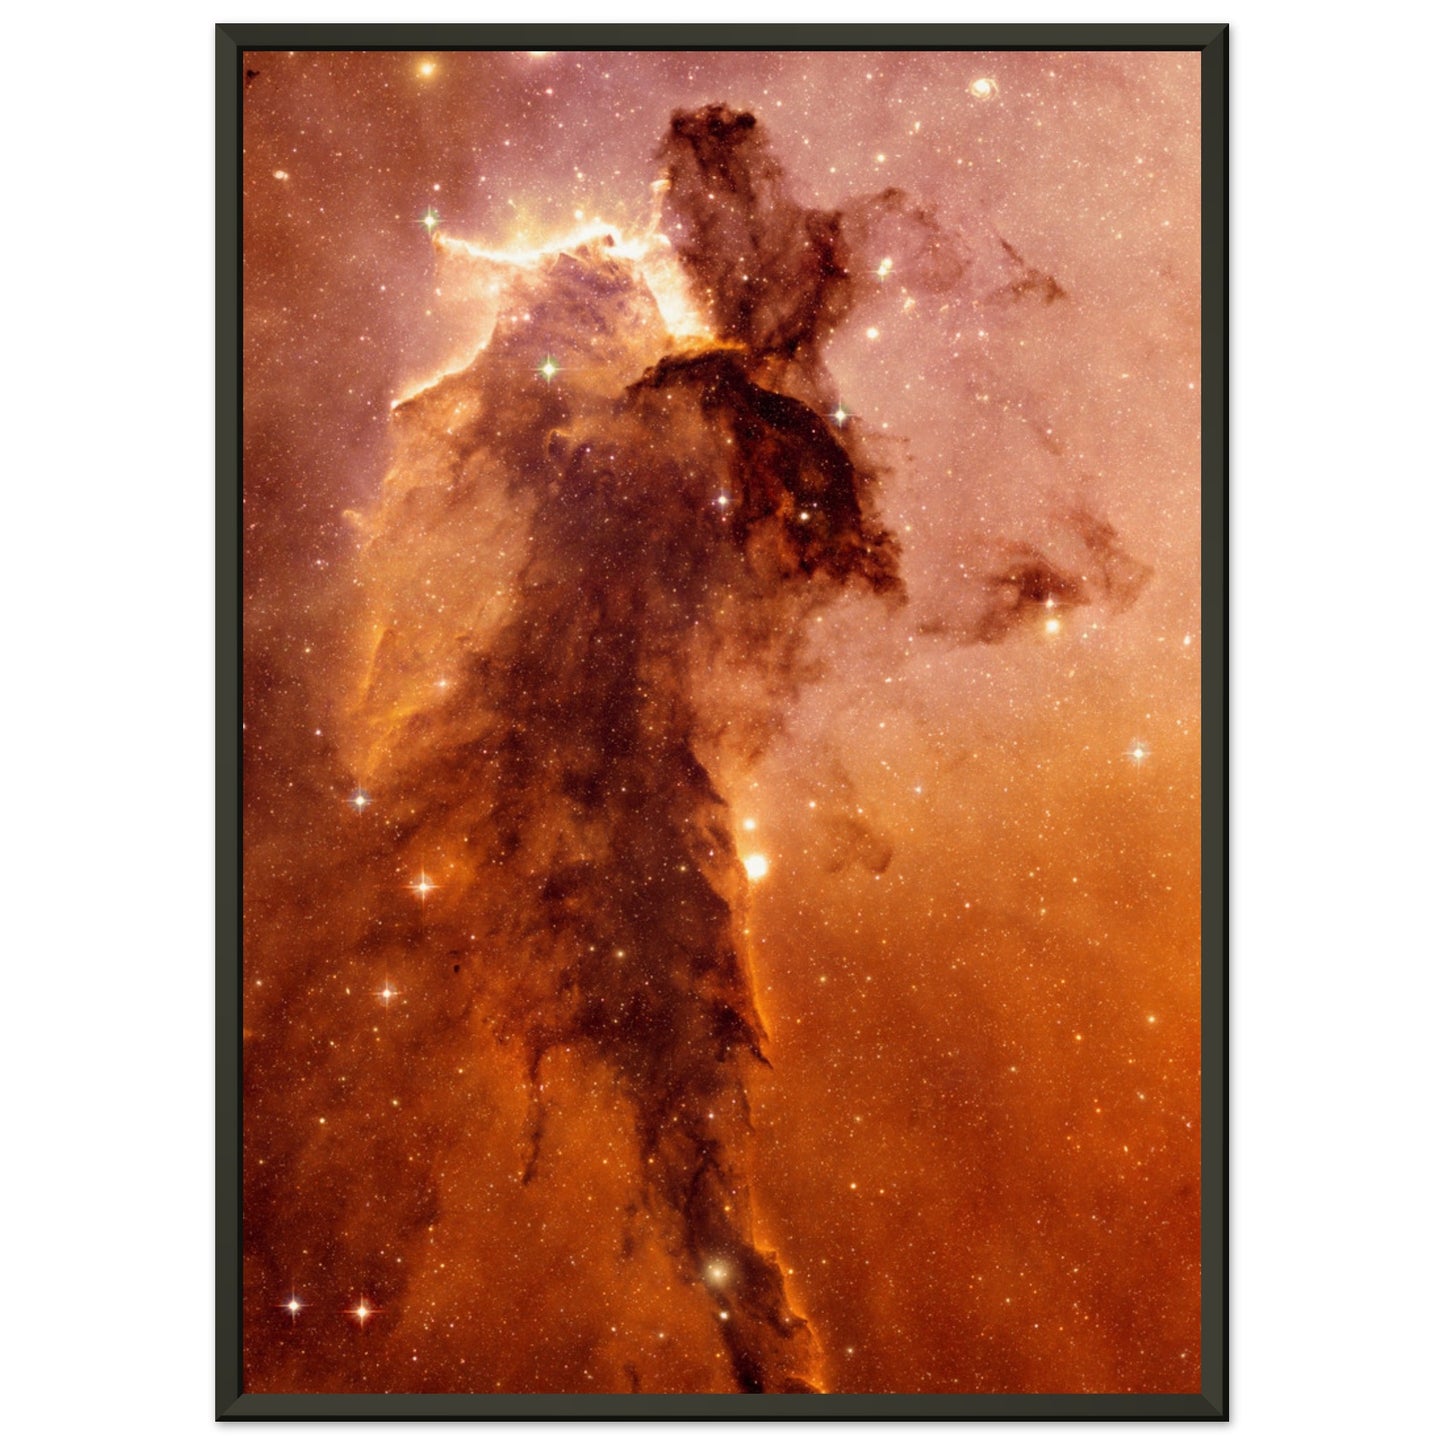 The "Black Pillar" spire within the Eagle Nebula